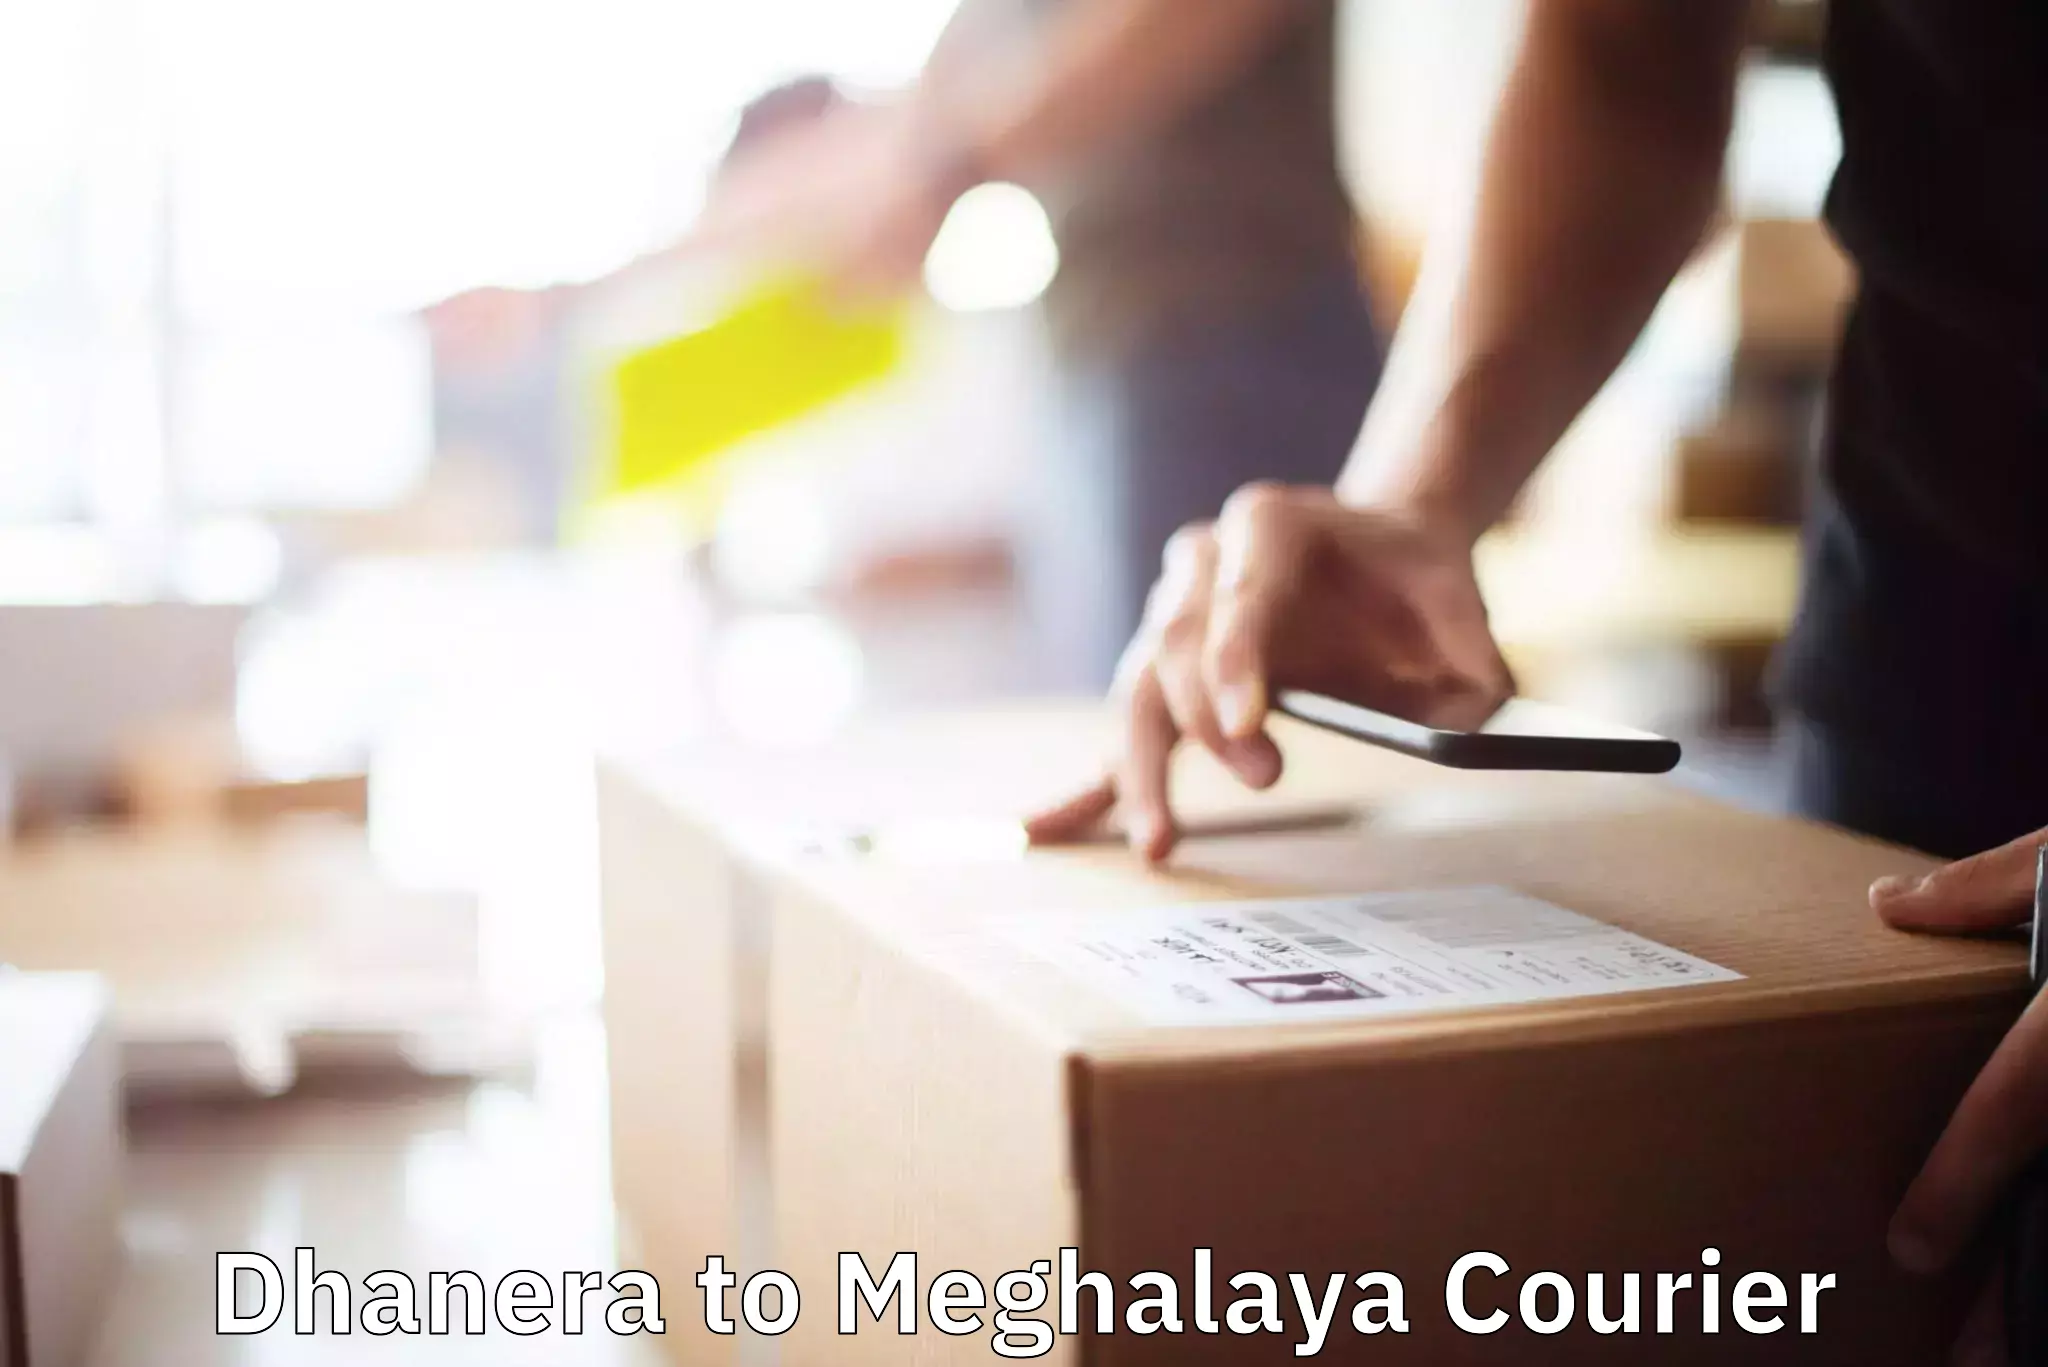 Professional moving company Dhanera to Meghalaya